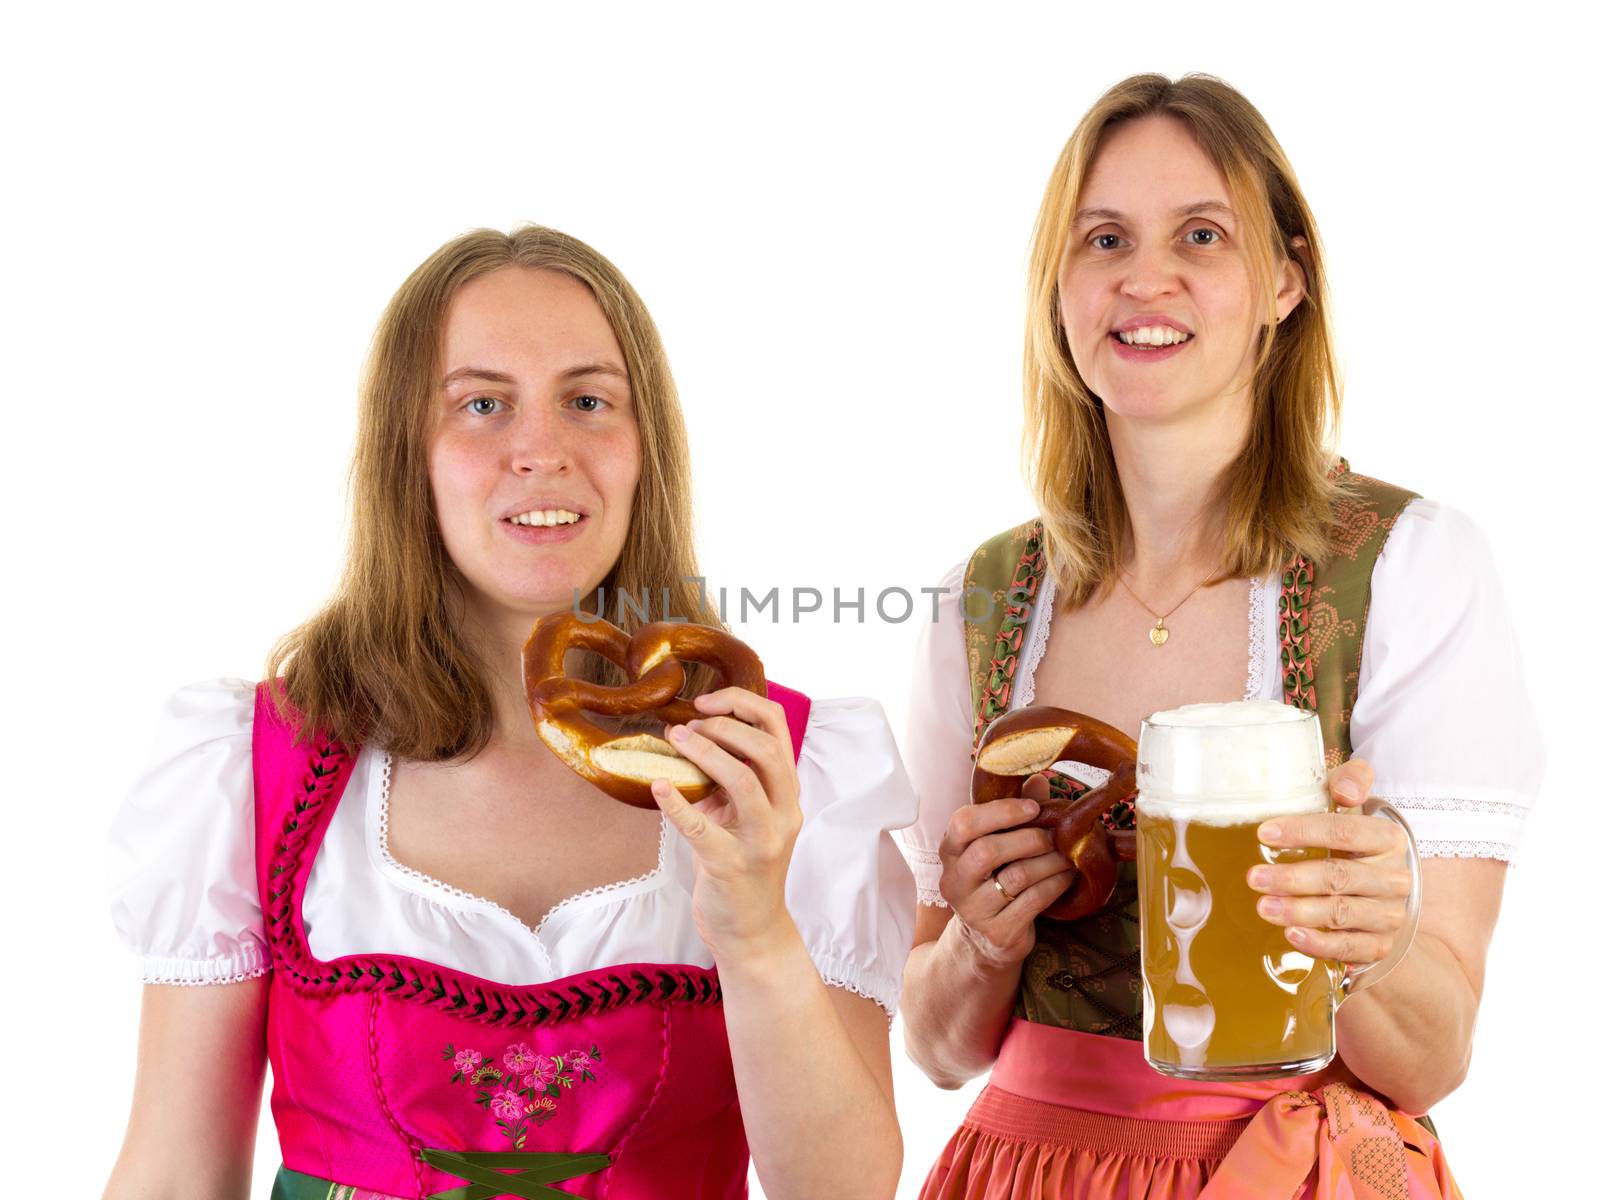 Eating pretzel and drinking beer at oktoberfest